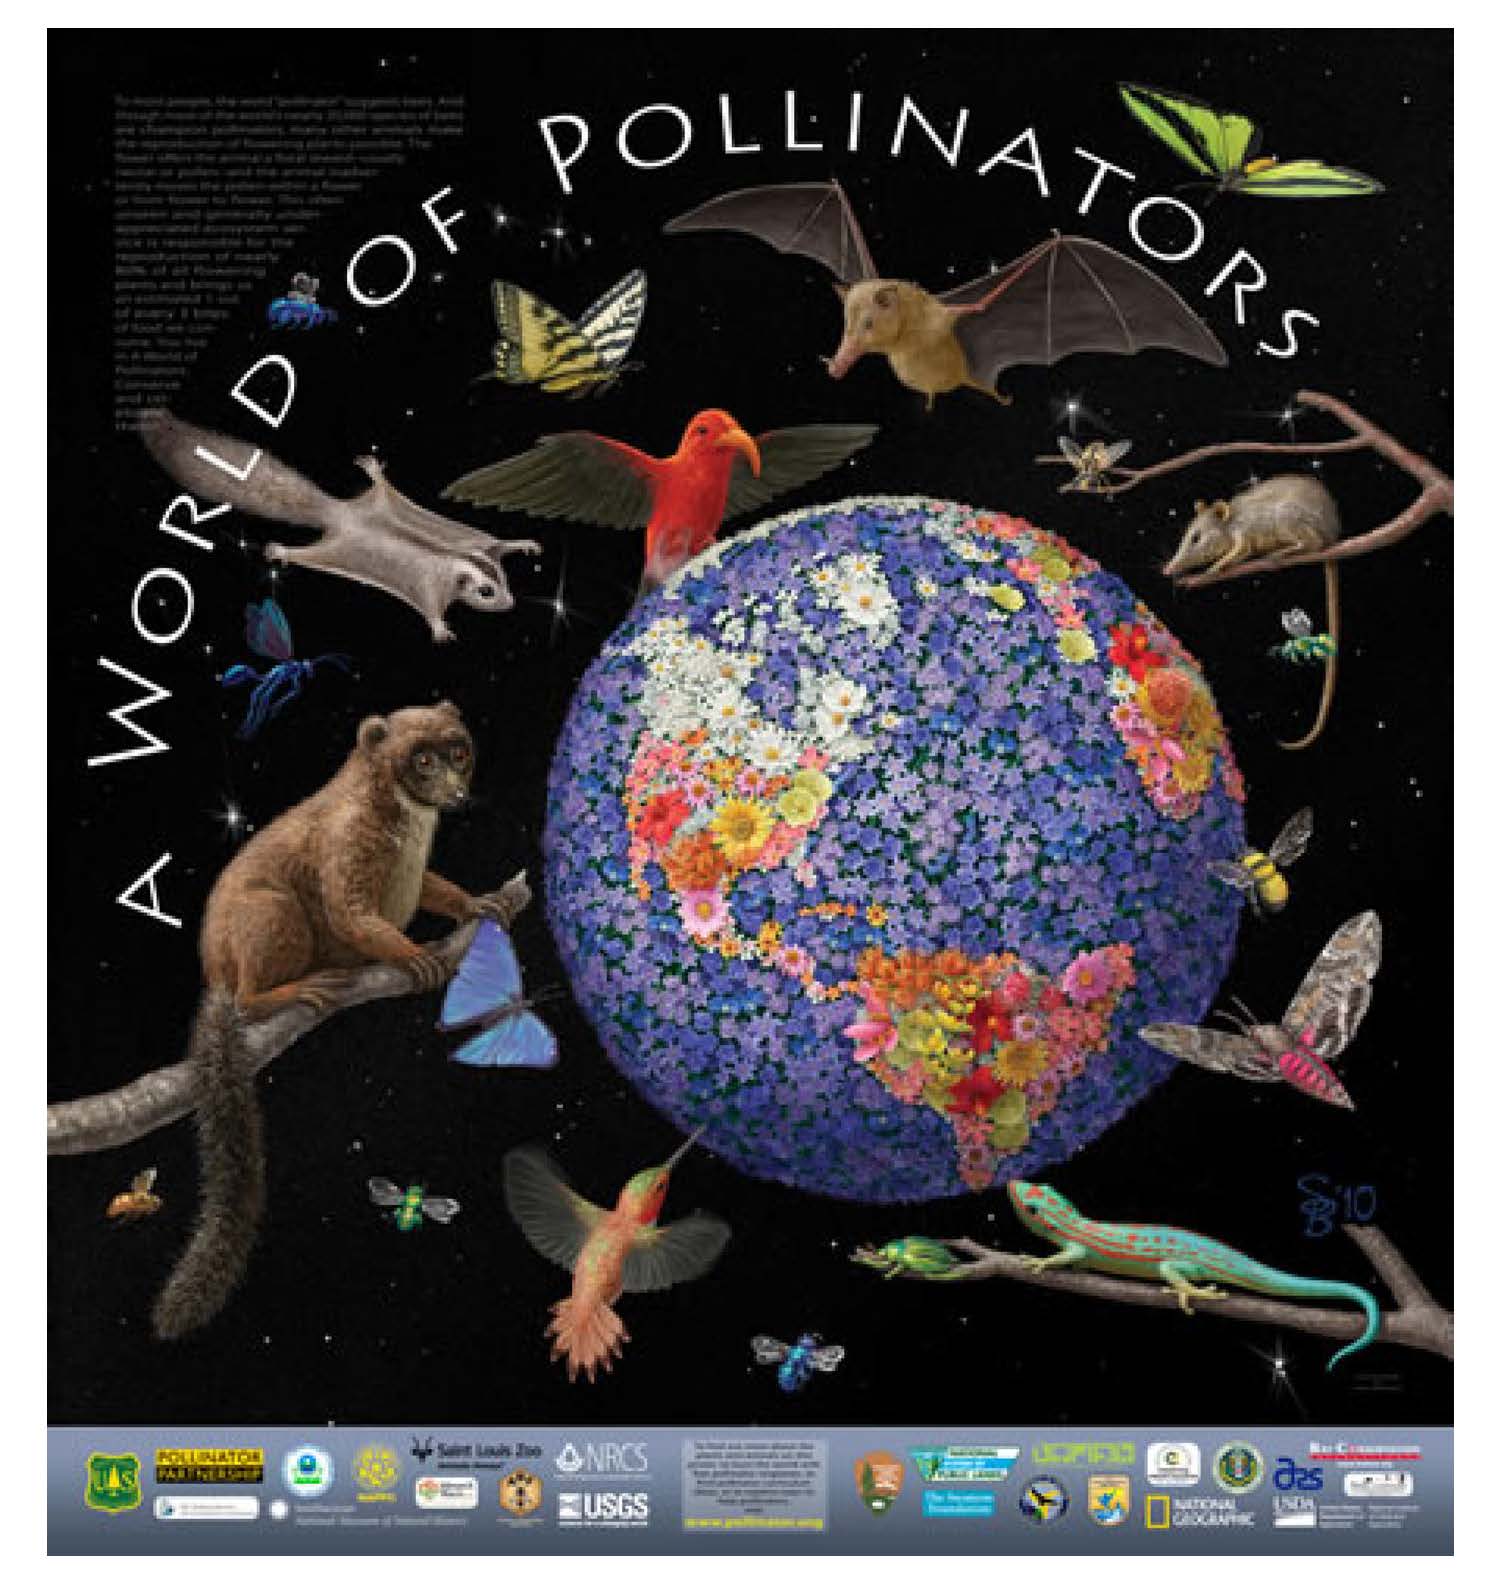 2010 Pollinator poster